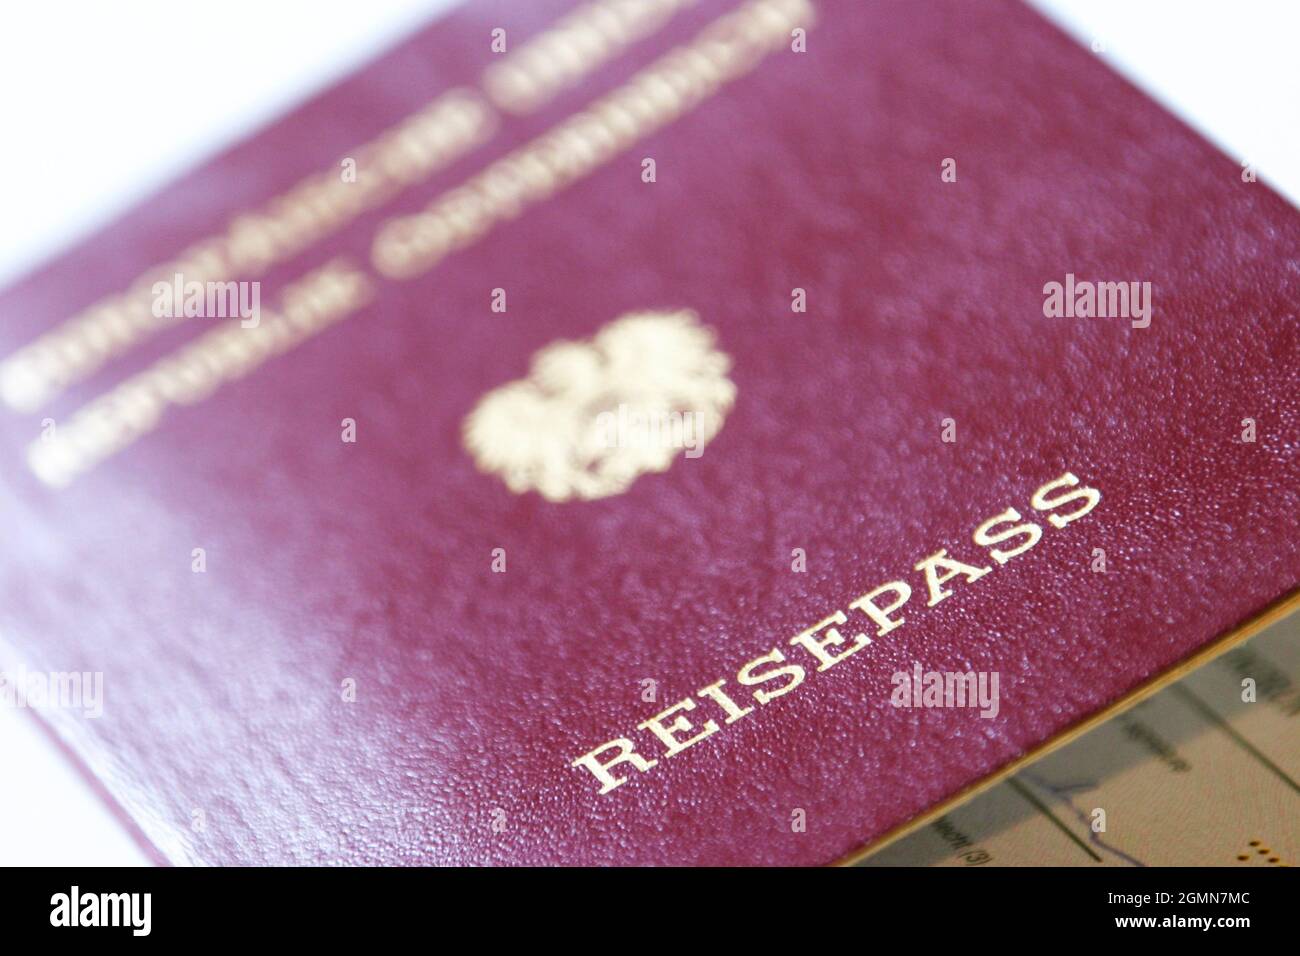 passport of Austria, Republik Oesterreich, Austria Stock Photo